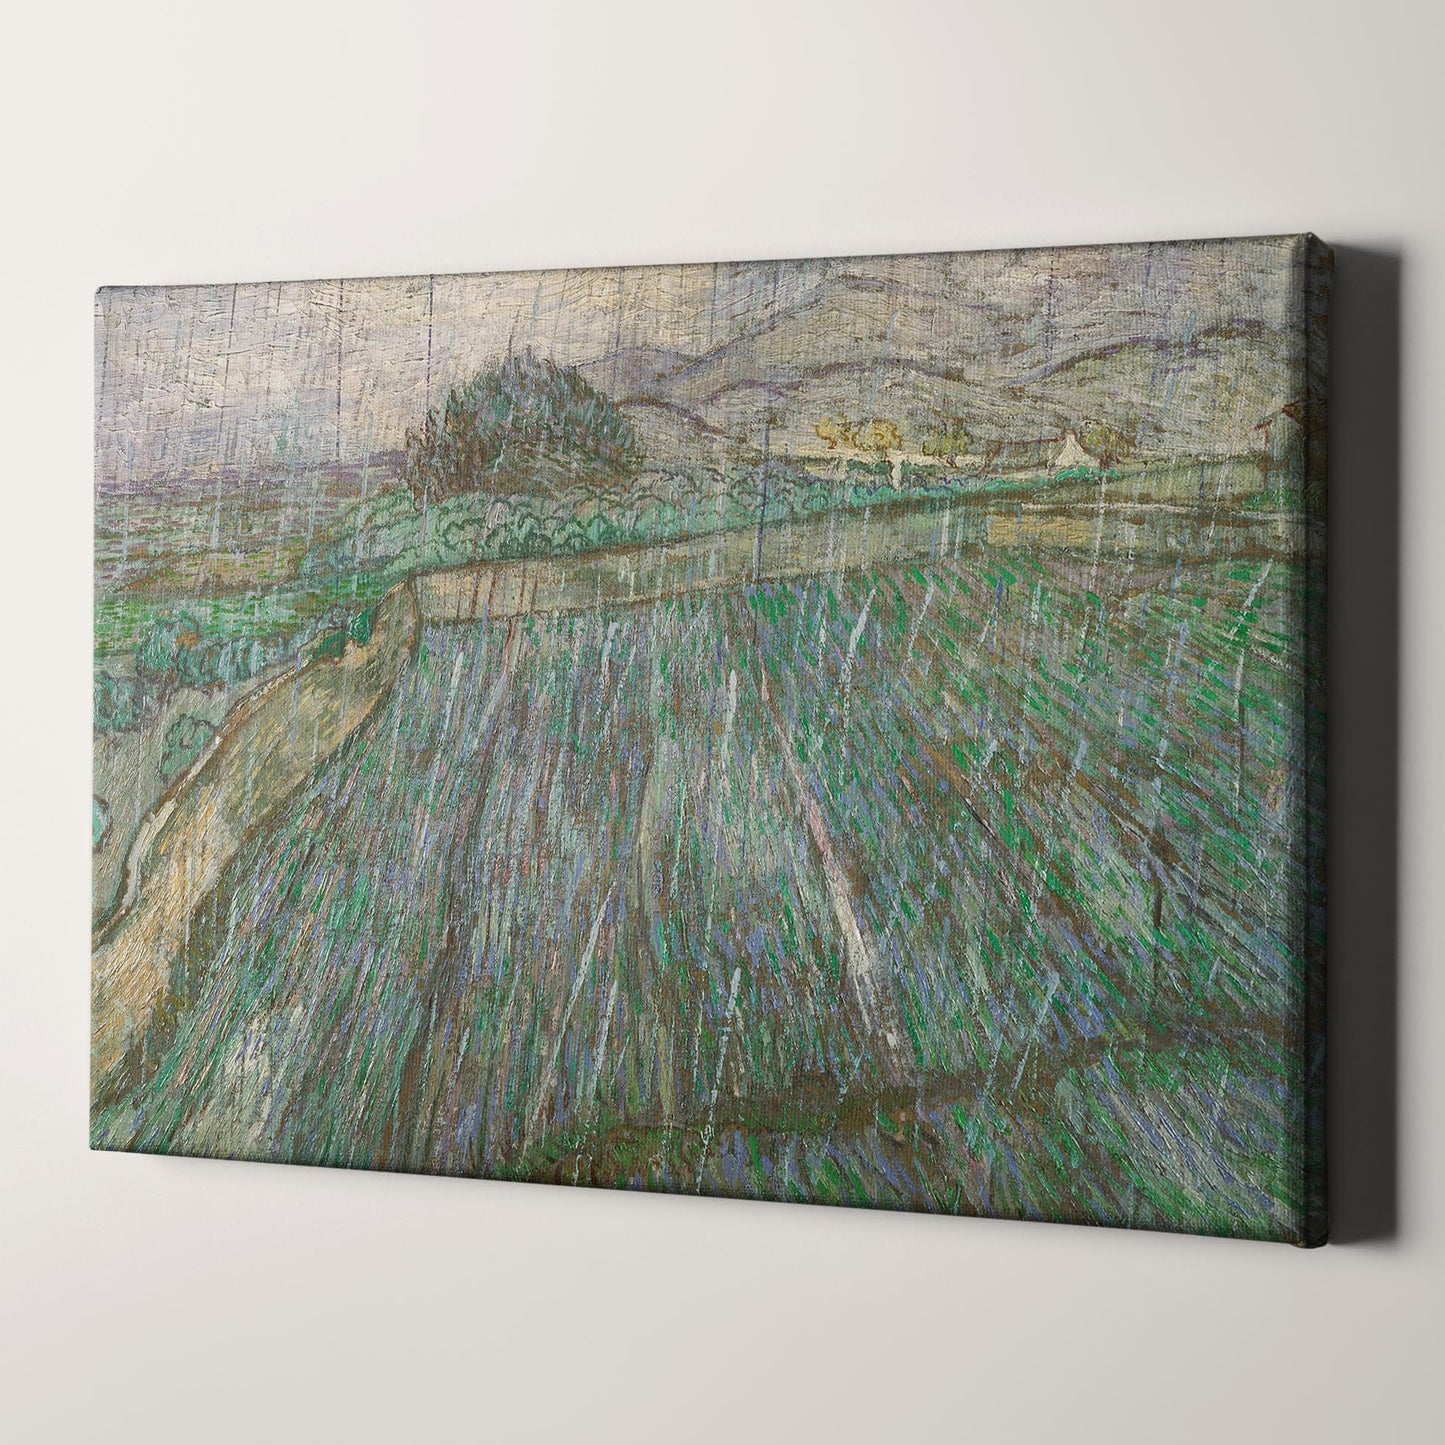 Dutch Rain (1889) by Van Gogh